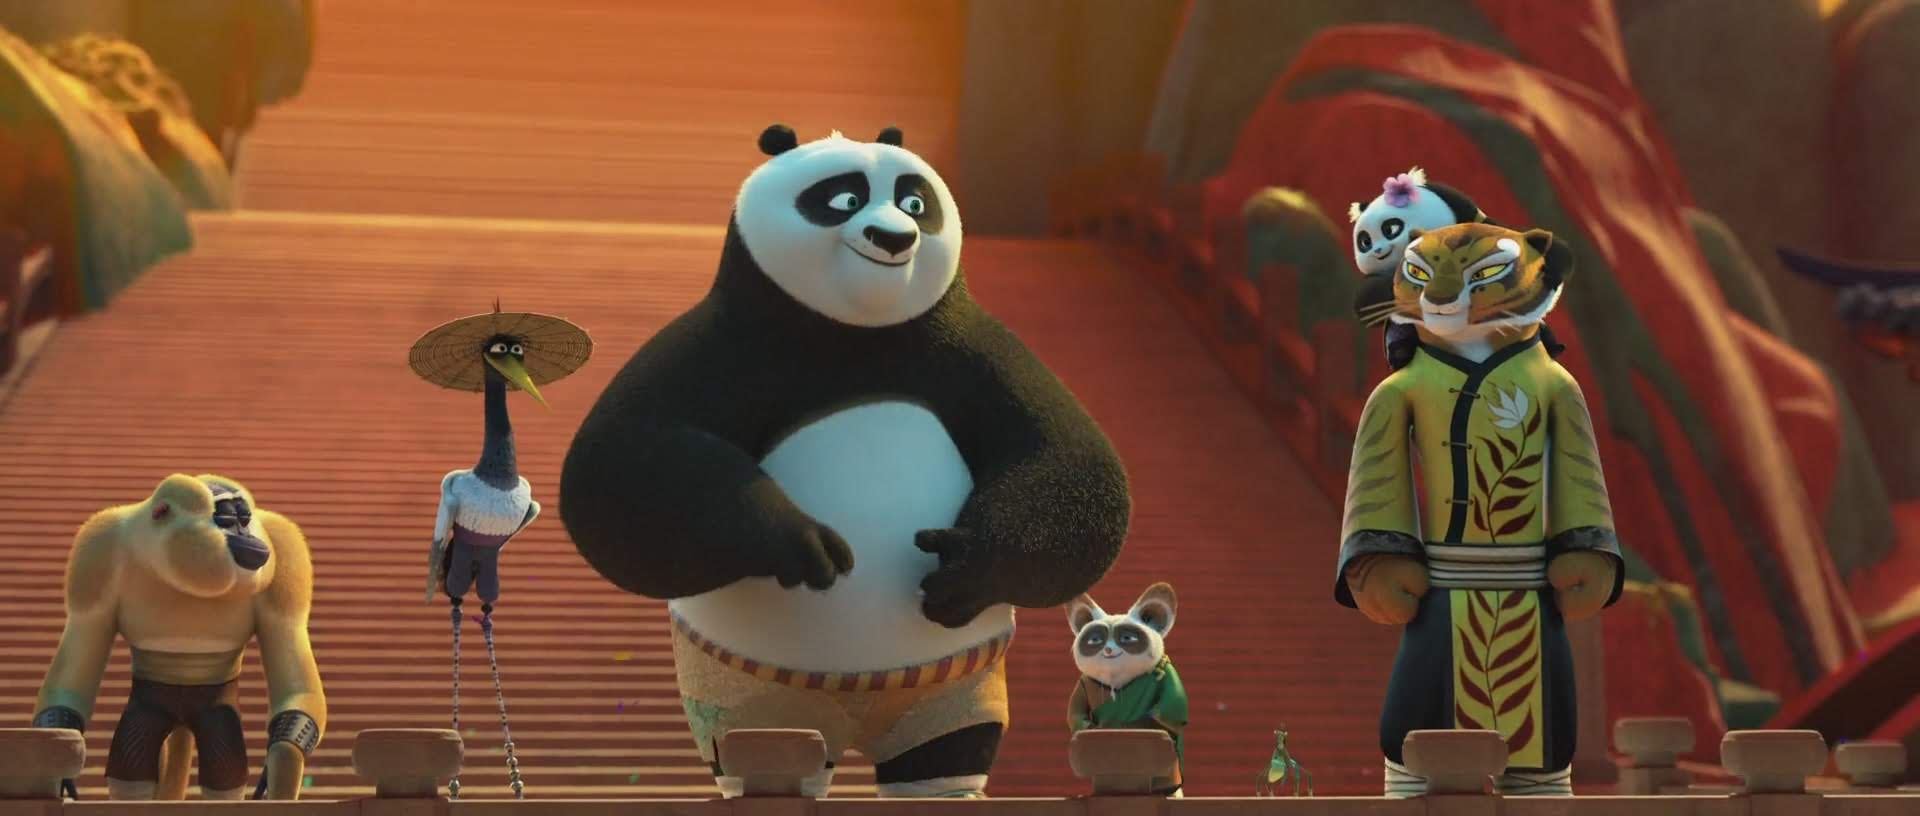 wach kung fu panda 3 online free